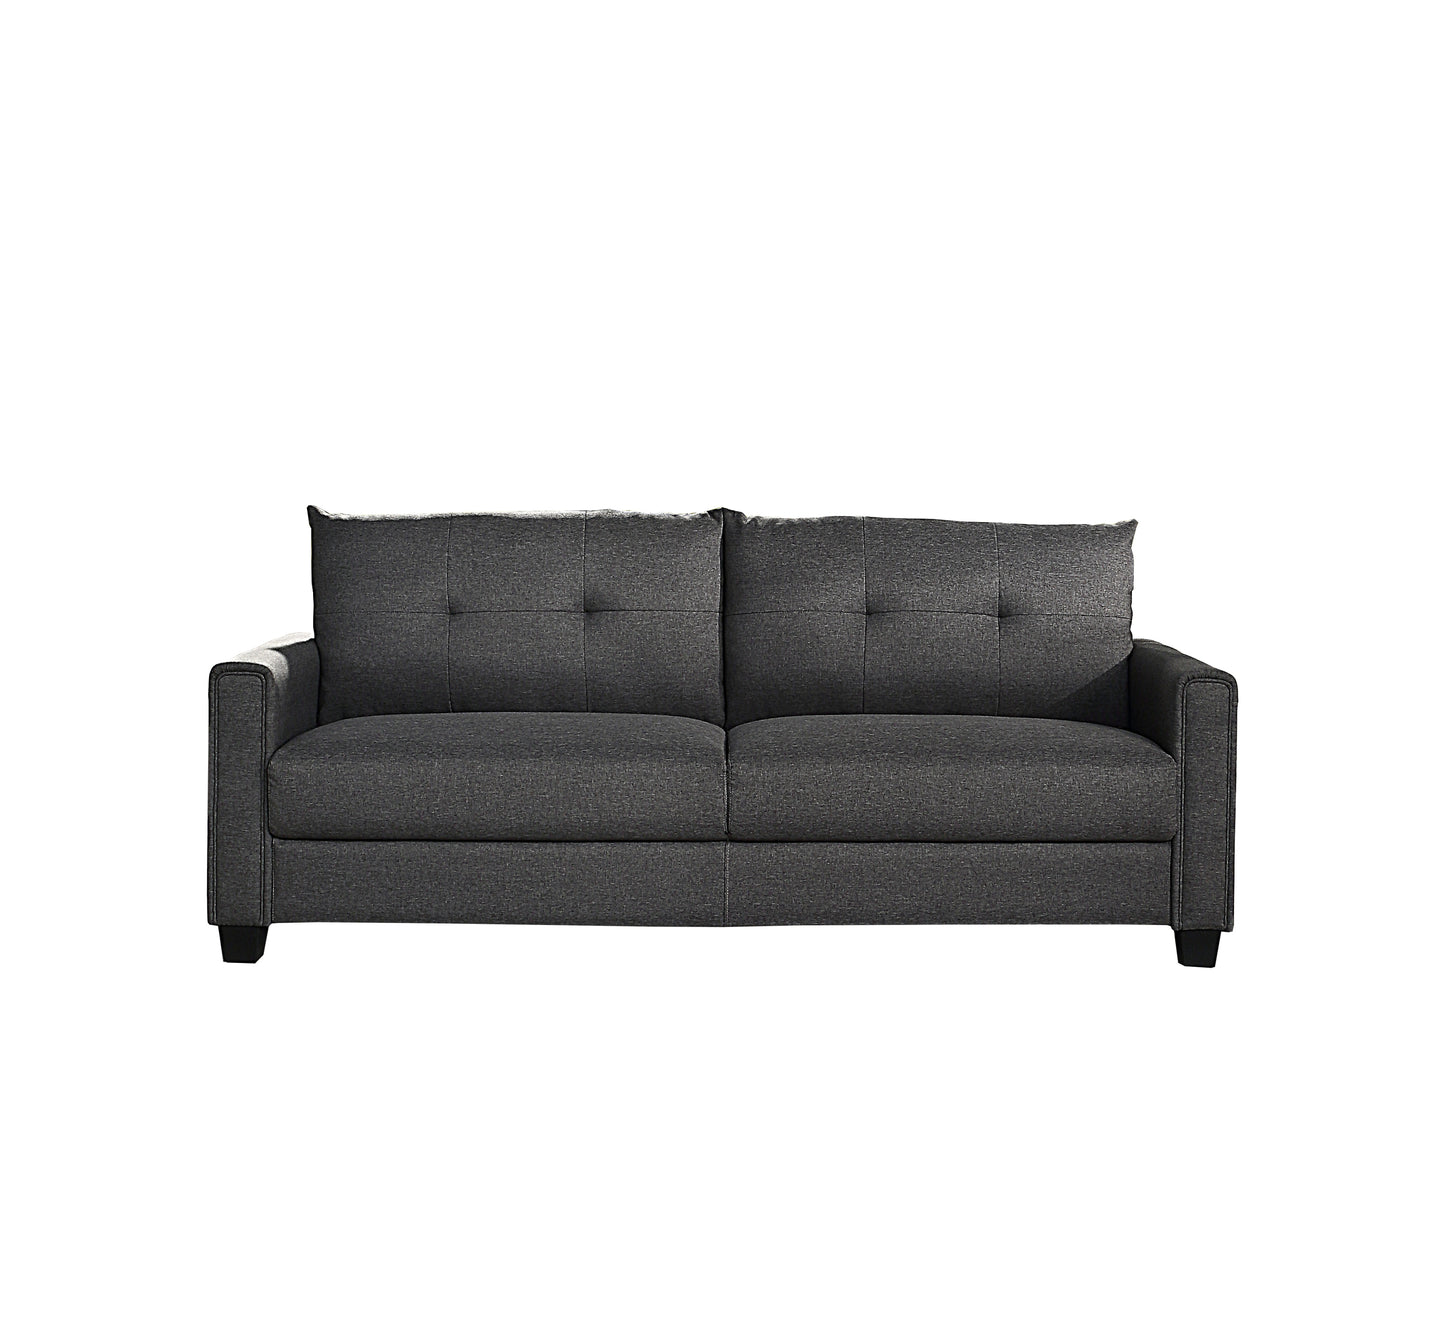 Linen Fabric Upholstery sofa/Tufted Cushions/ Easy, Assembly,Dark Grey